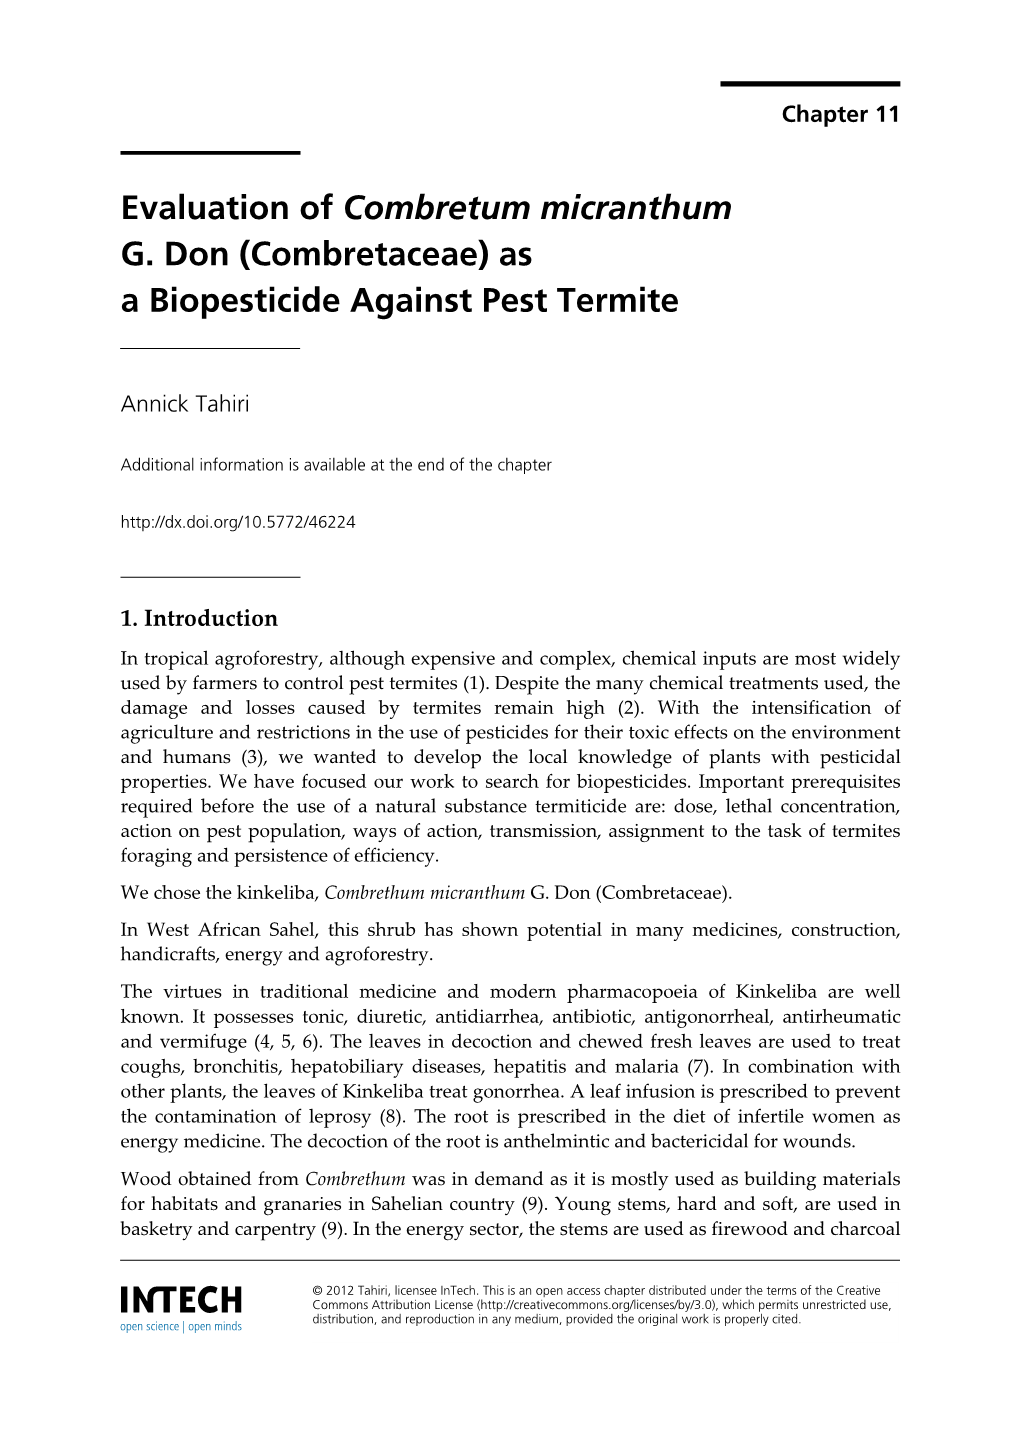 Evaluation of Combretum Micranthum G. Don (Combretaceae) As a Biopesticide Against Pest Termite